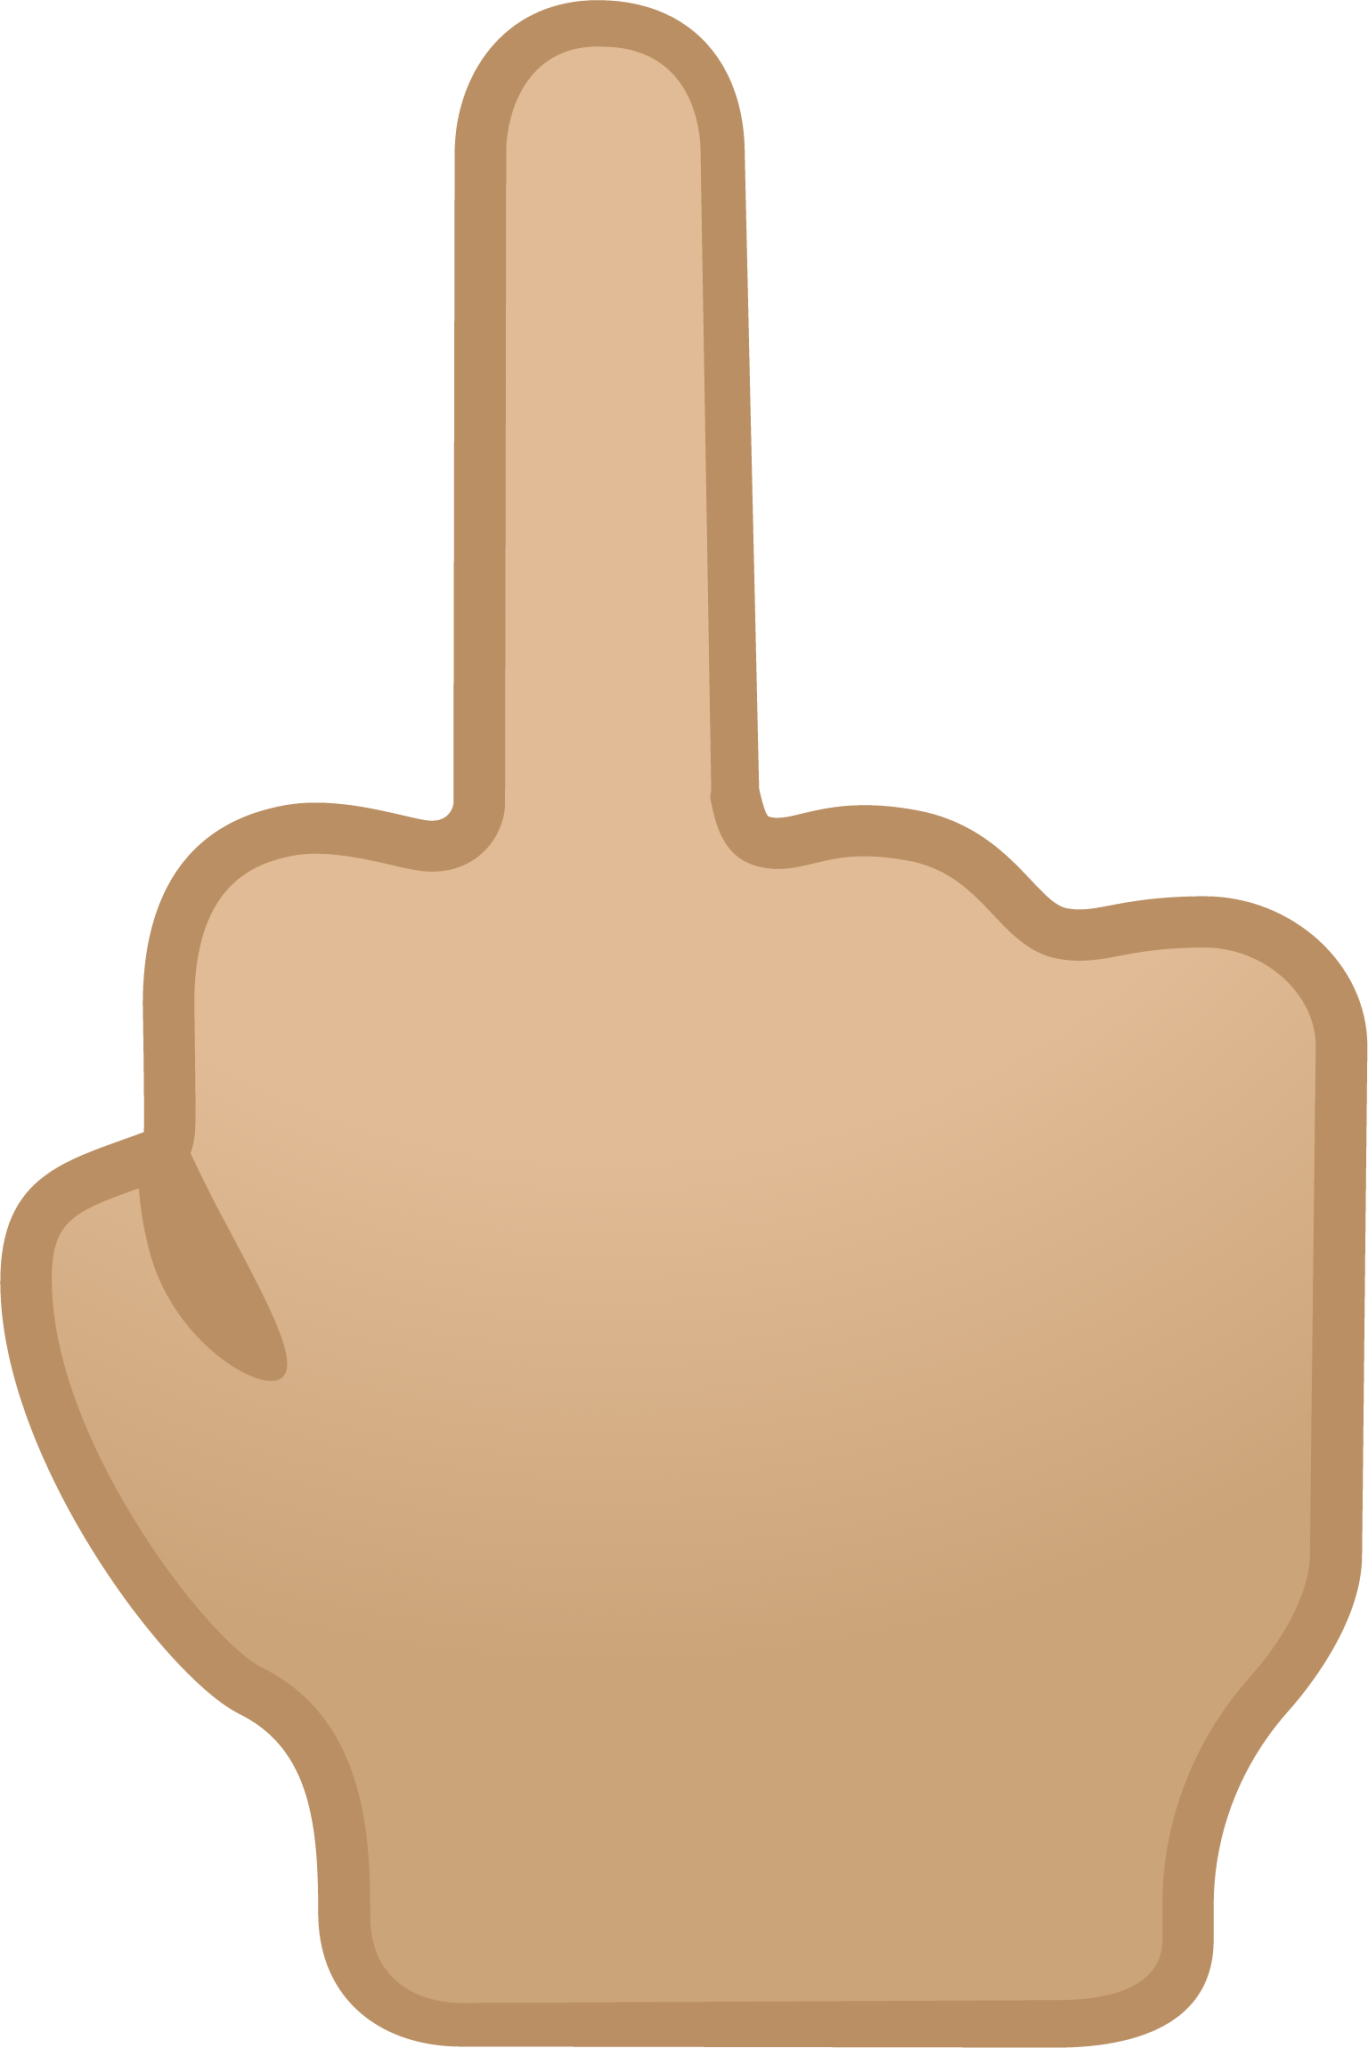 middle finger: medium-light skin tone emoji